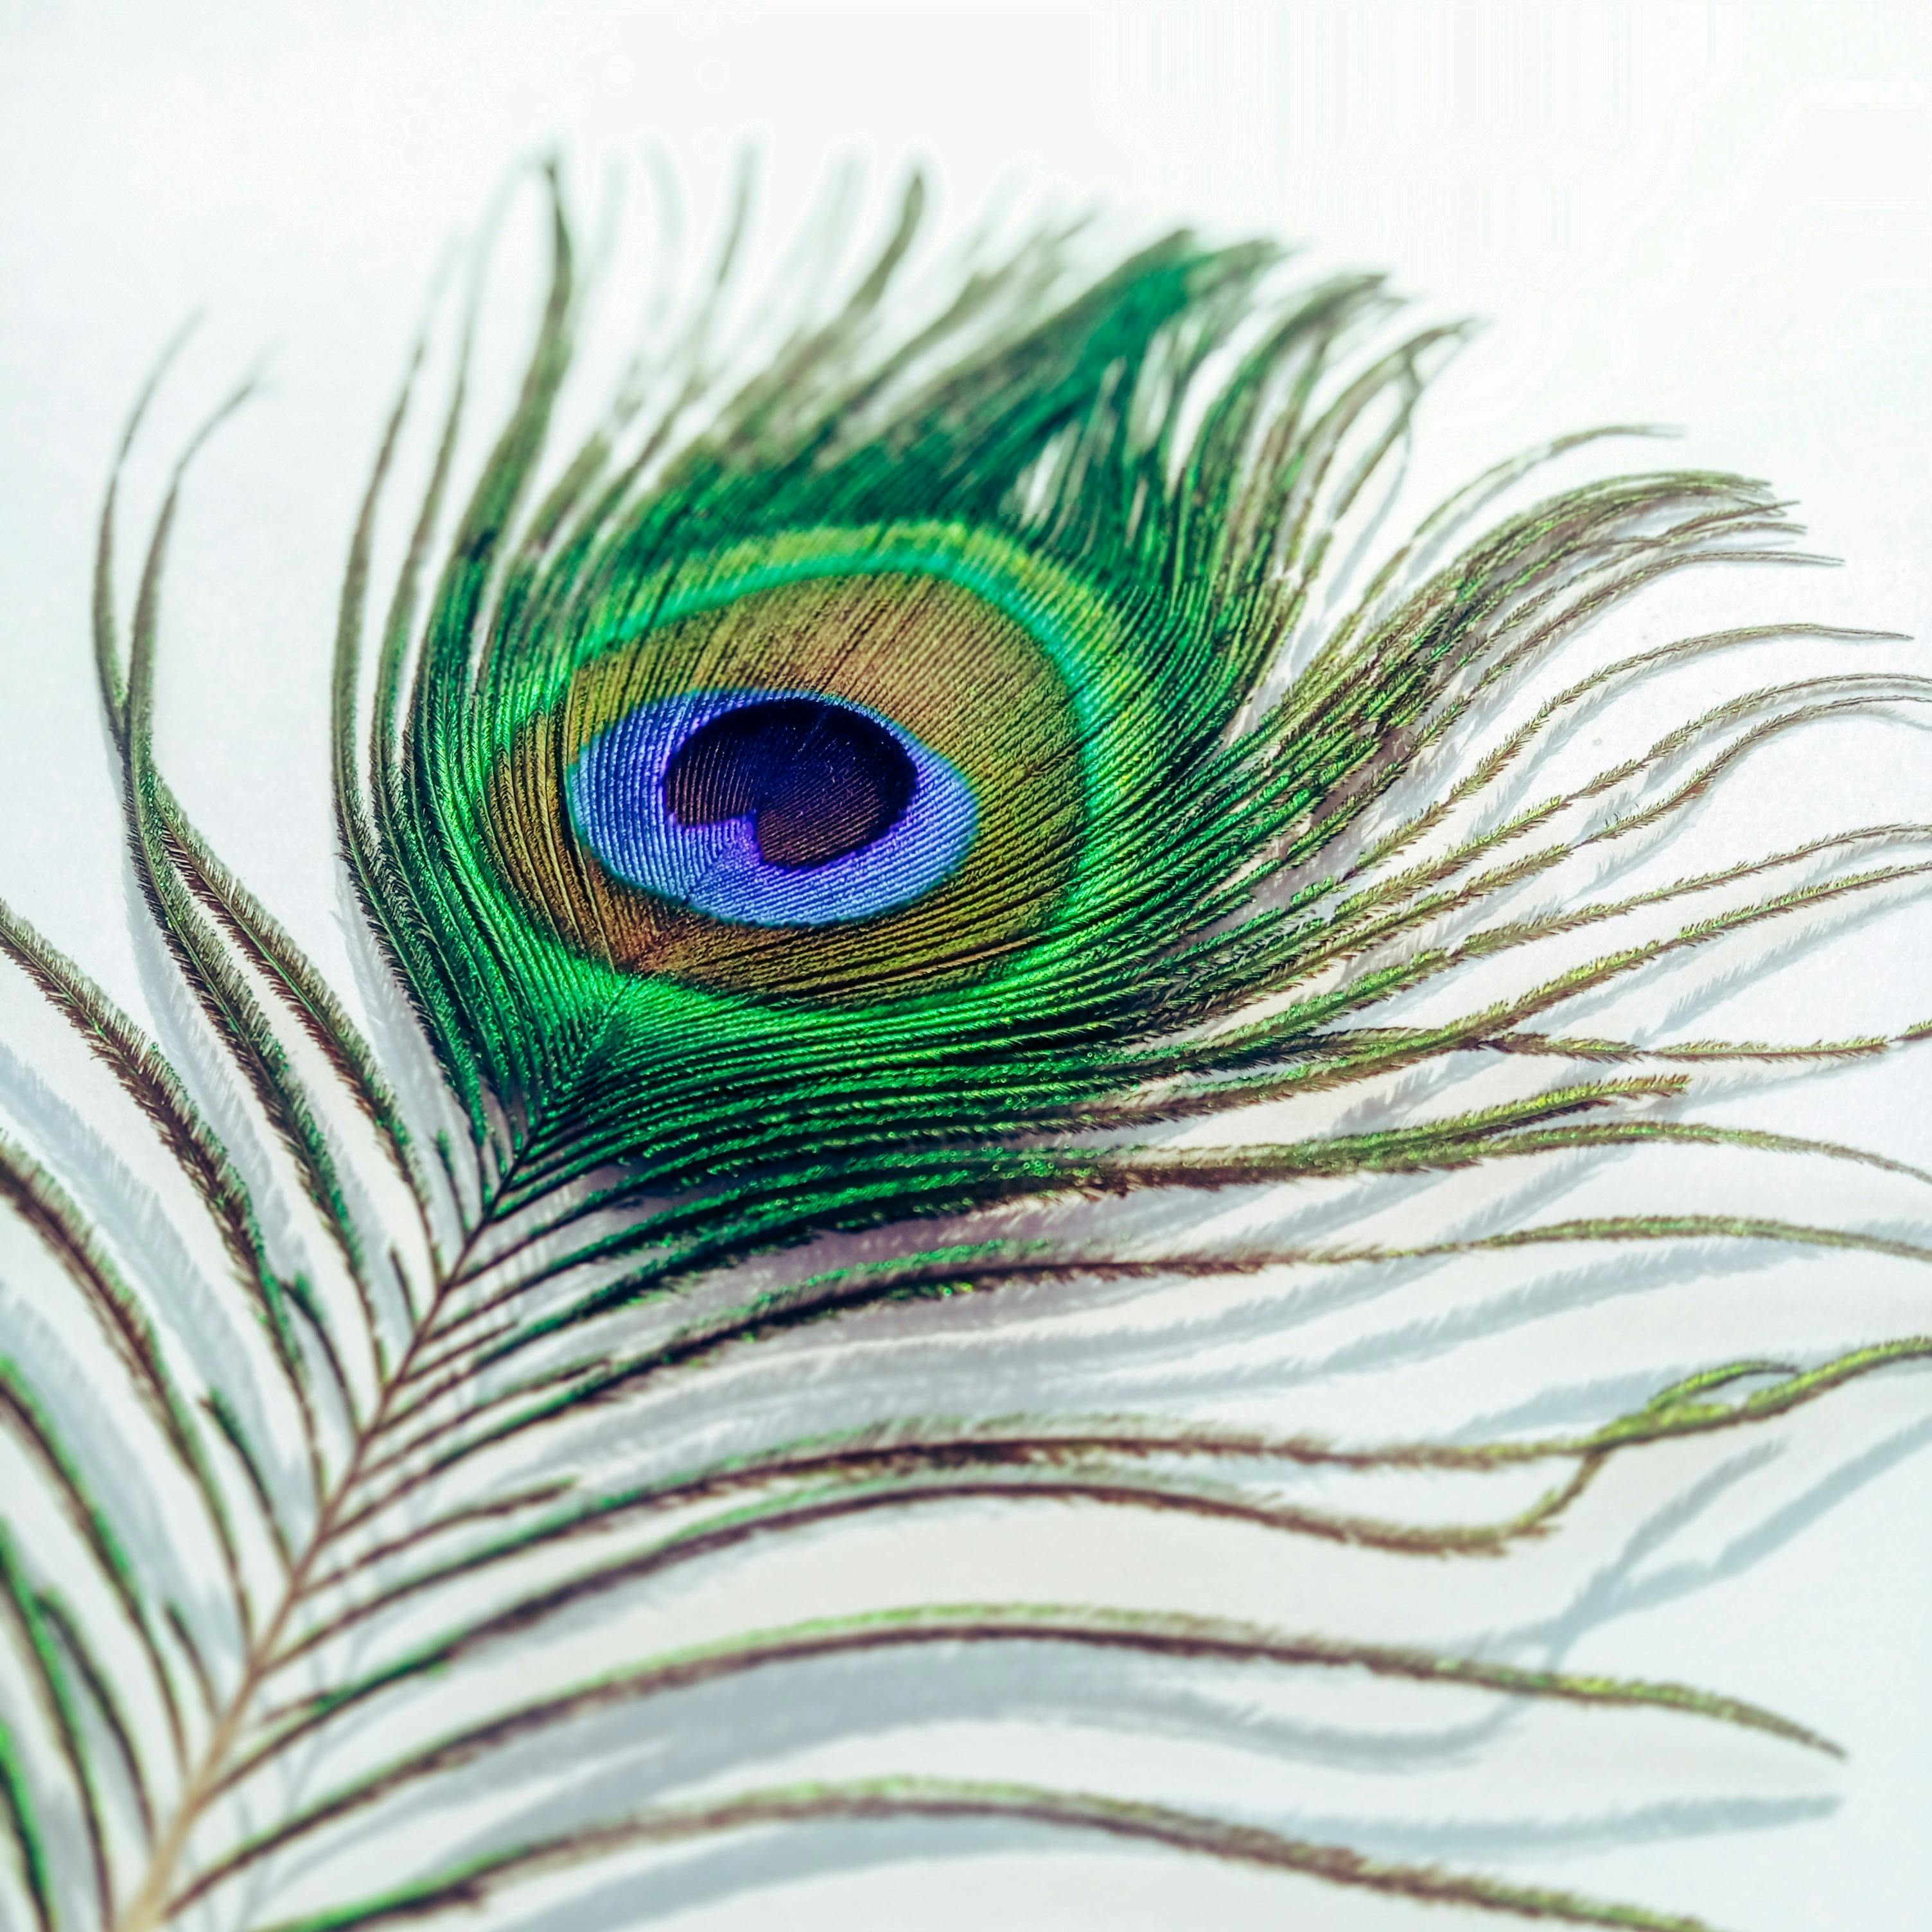 Single peacock feather closeup Stock Photo by vmariia